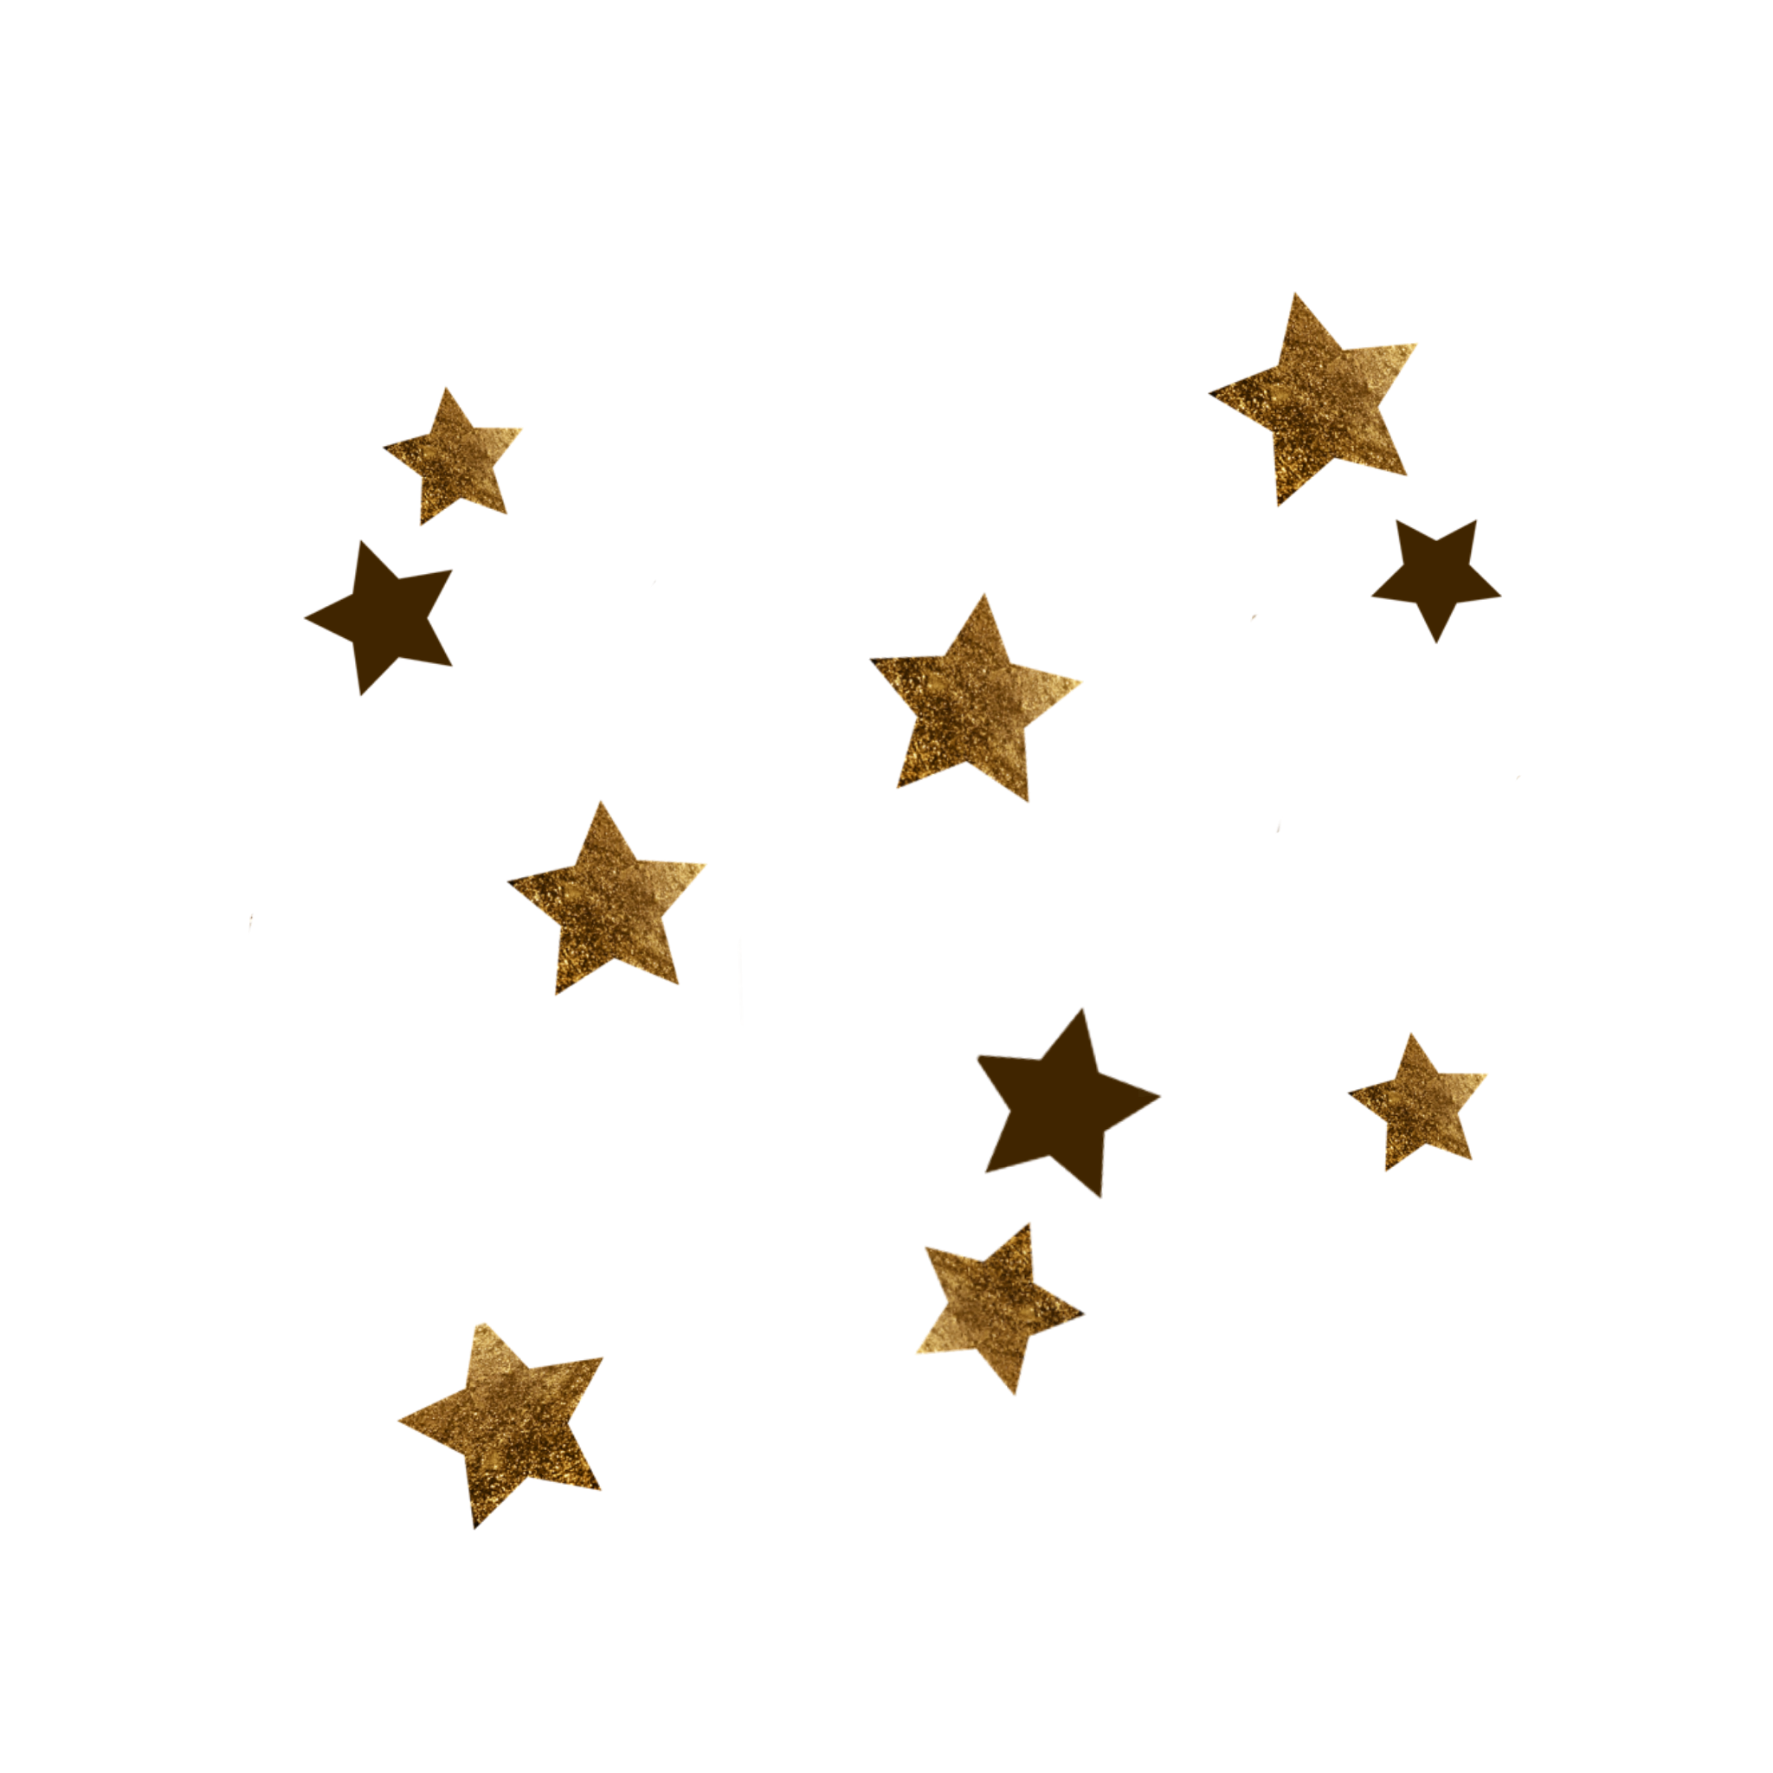 estrellas stars golden gold 243929770008212 by @dinycristii.